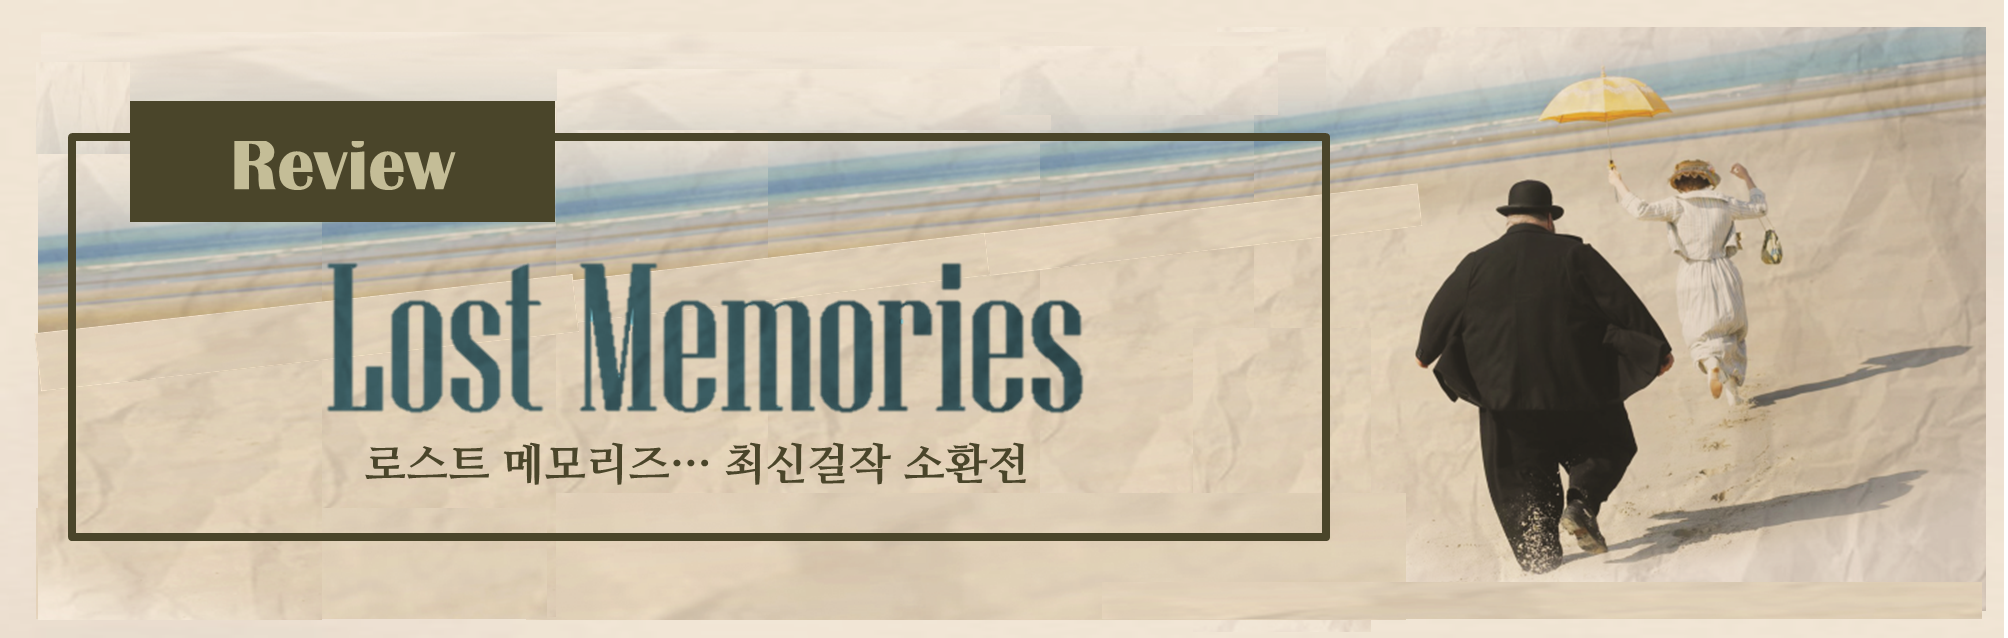 Review Lost Memories 로스트 메모리즈... 최신걸작 소환전